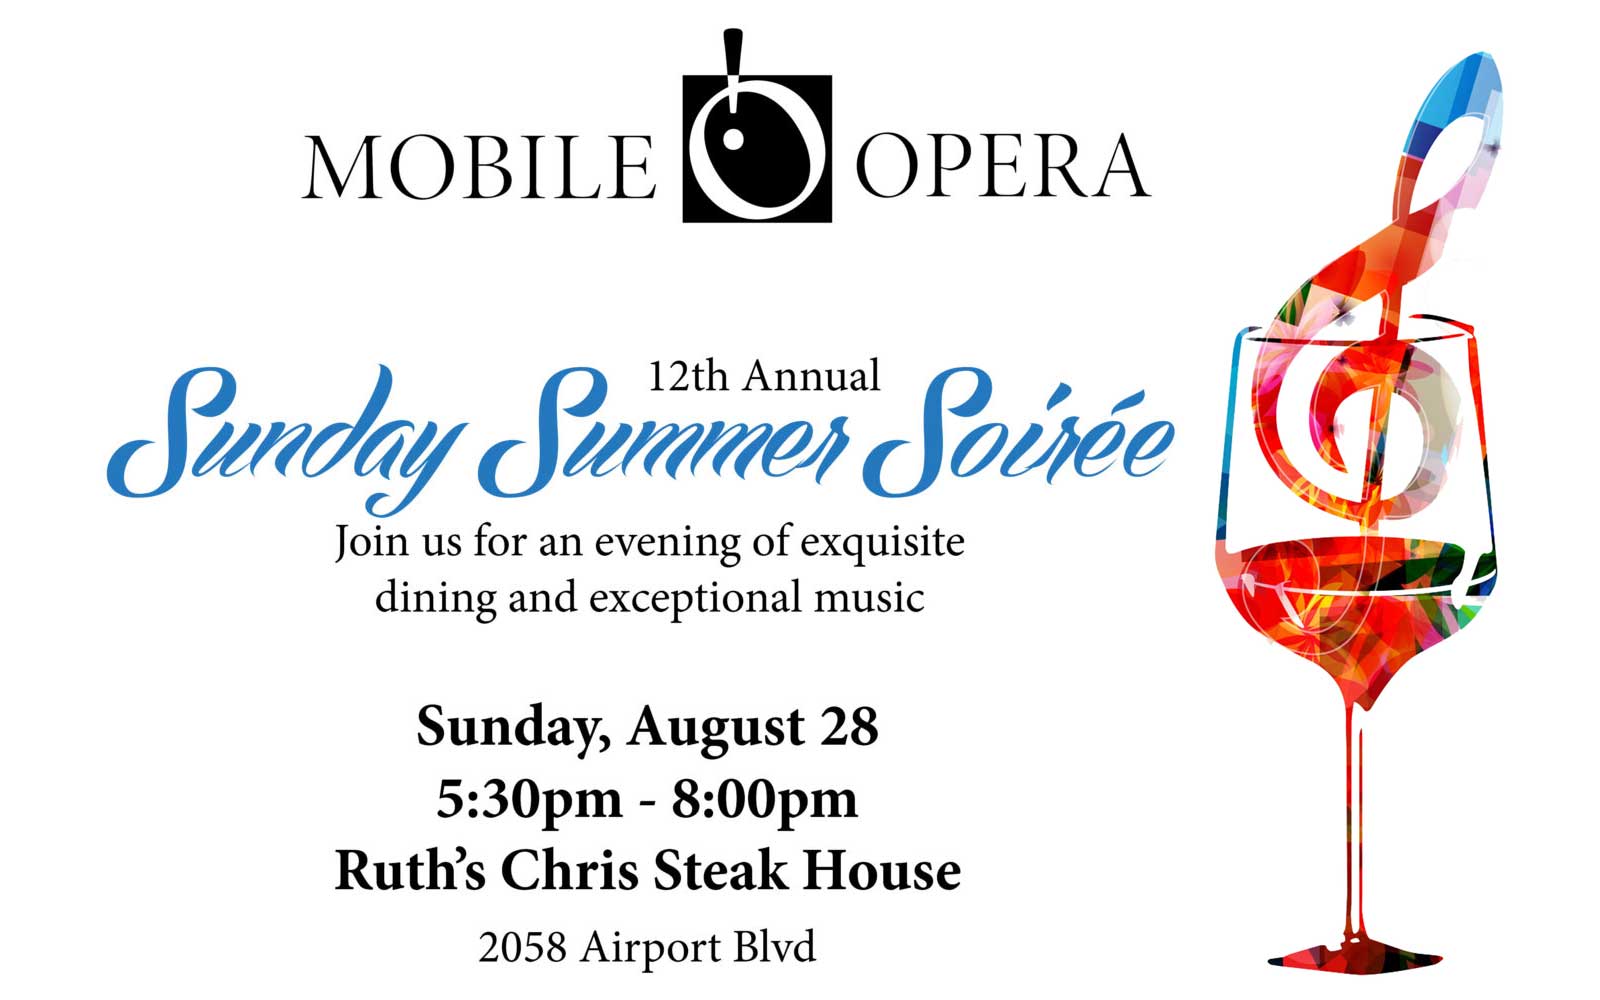 Mobile Opera Announces Fundraiser